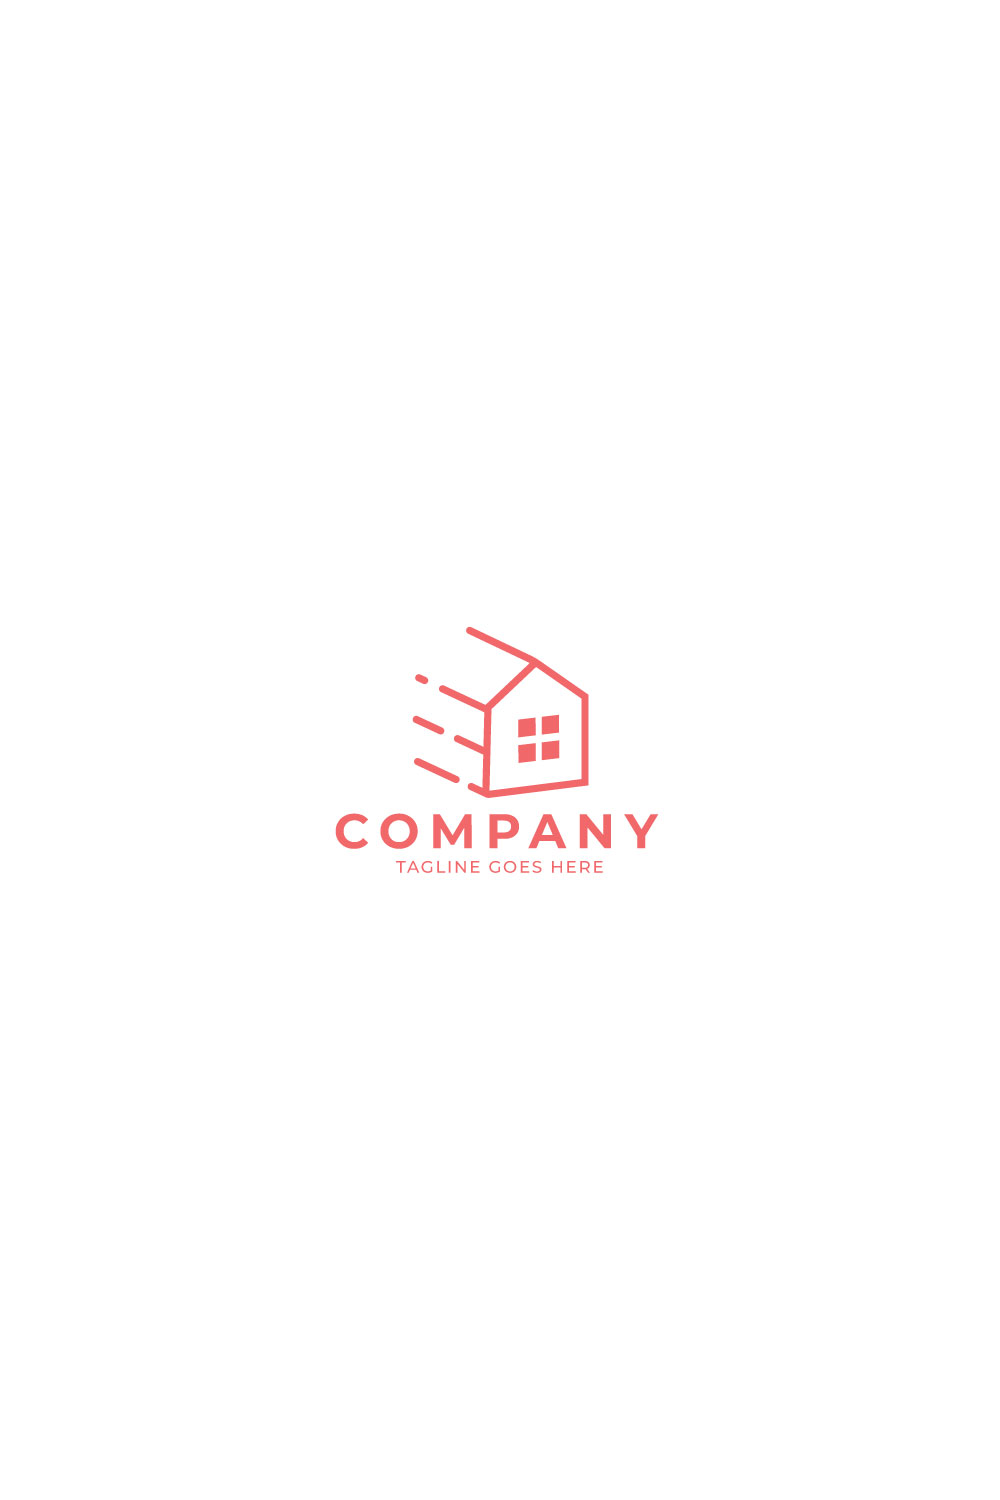 Real estate logo design template ,House And Building logo design pinterest preview image.